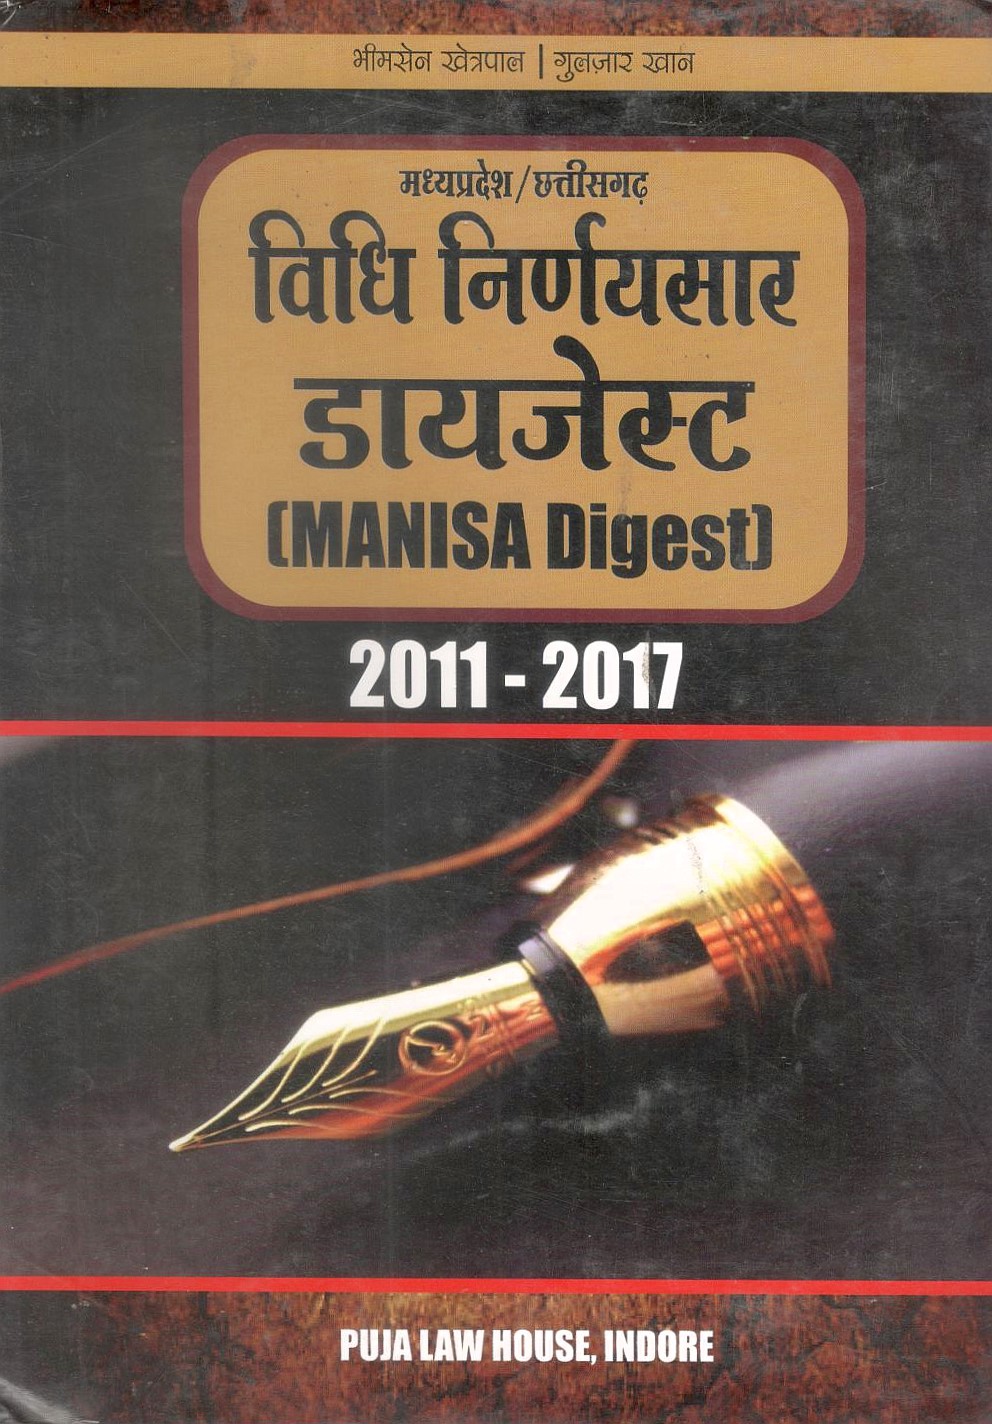 गुलज़ार खान – मध्य प्रदेश/छत्तीसगढ़ विधि निर्णयसार डायजेस्ट (मनीसा डाइजेस्ट) (2011-2017) / Madhya Pradesh/Chhattisgarh VNS Digest (2011-2017)